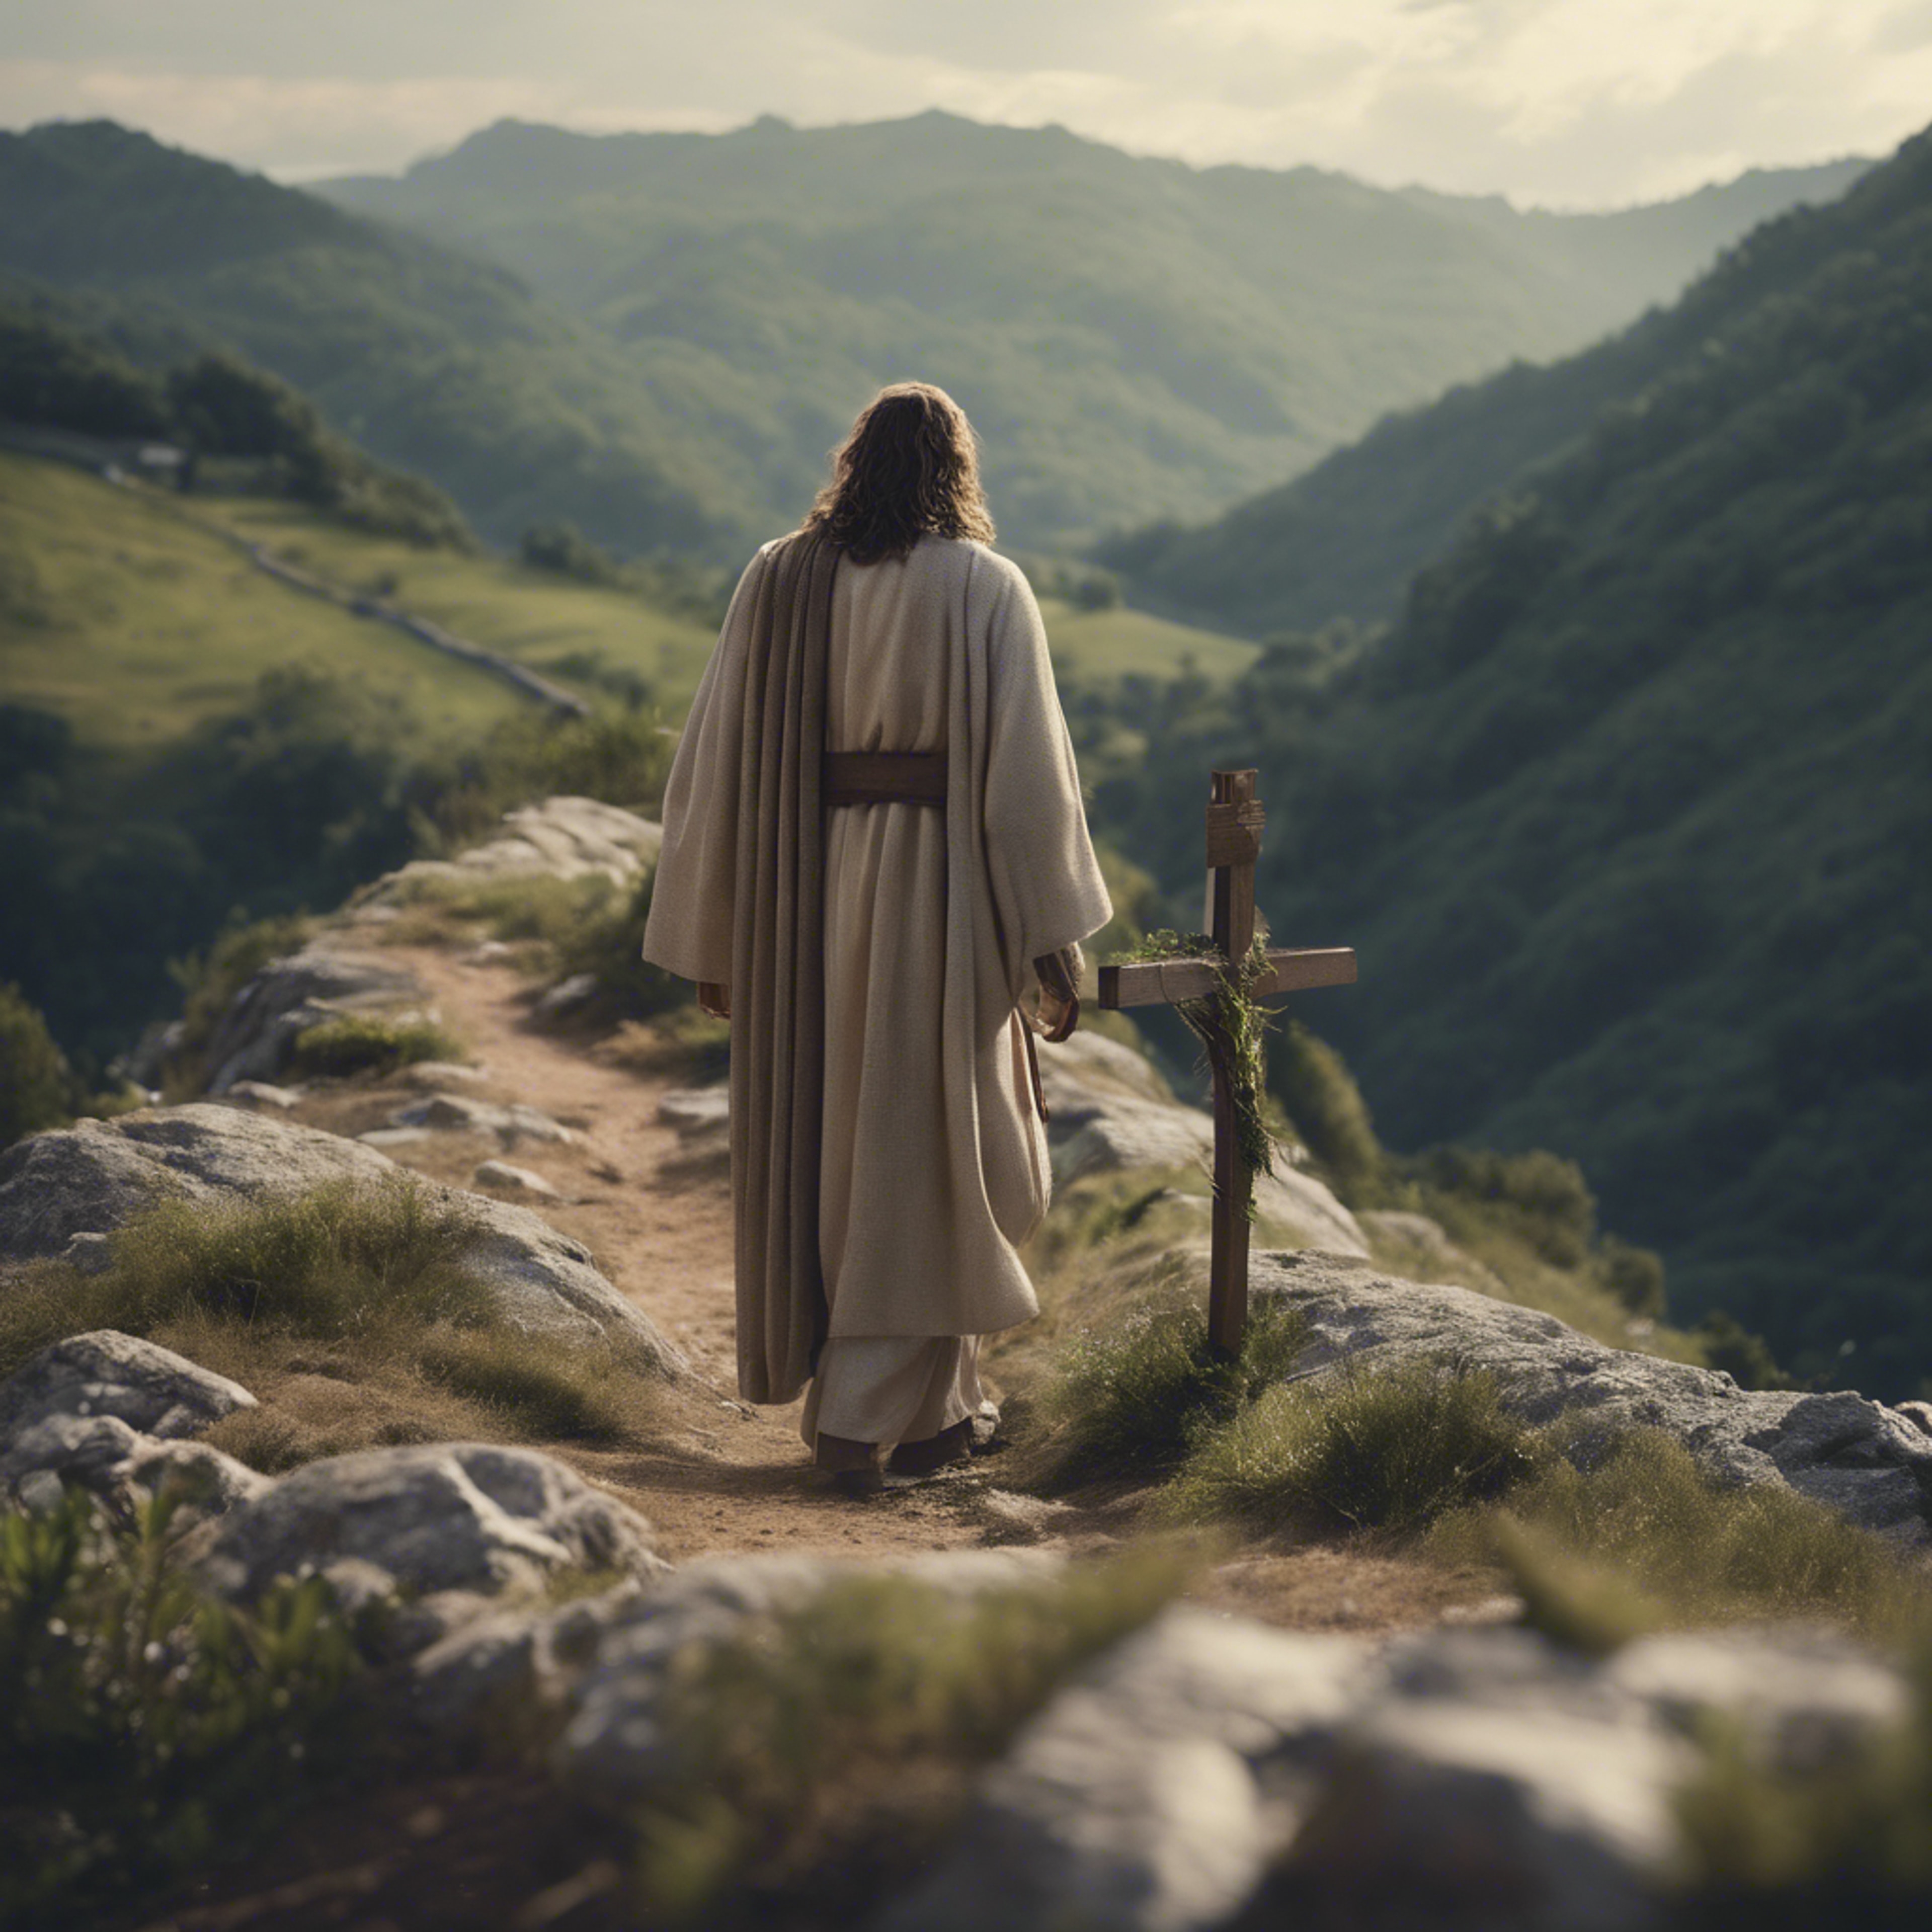 A somber yet inspiring scene of Jesus carrying the cross along a winding mountain path. Wallpaper[cec6dd957e1b48d0bb97]